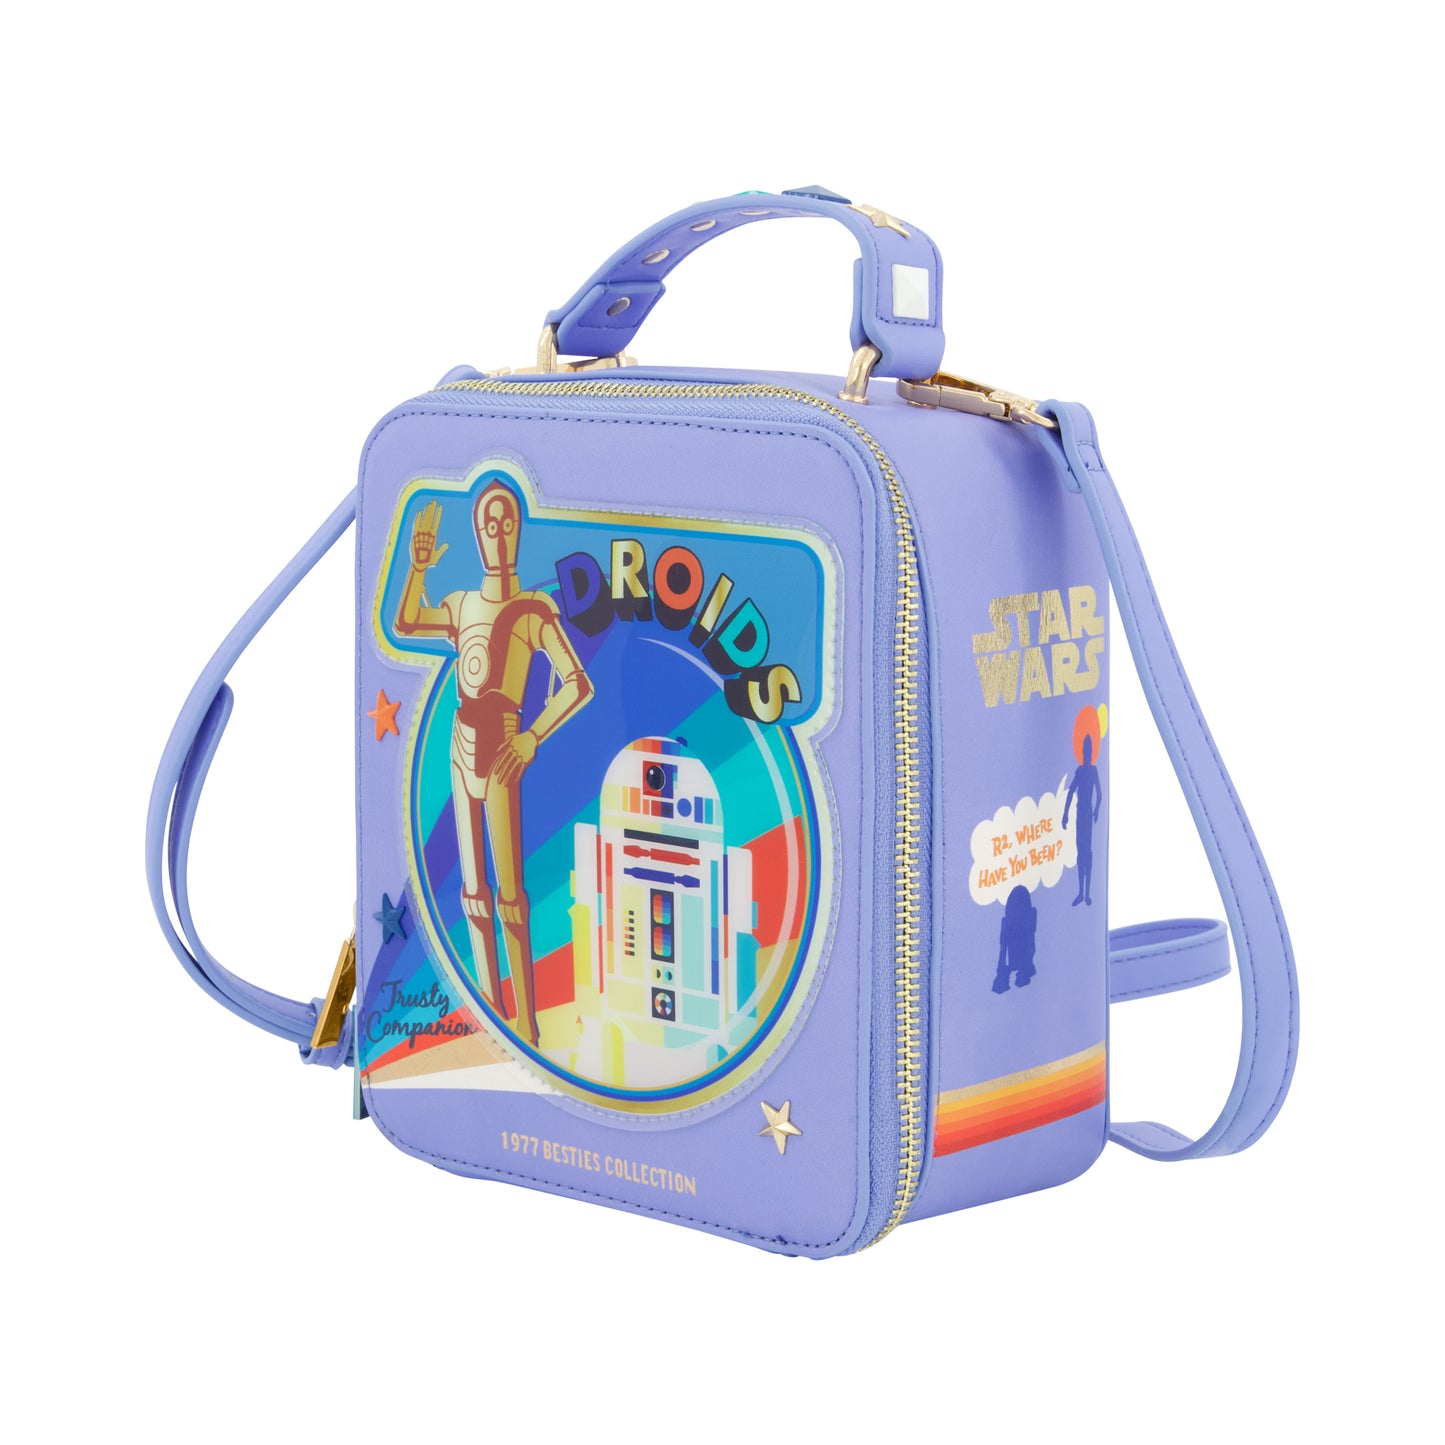 Star Wars Trusty Companion Crossbody Bag